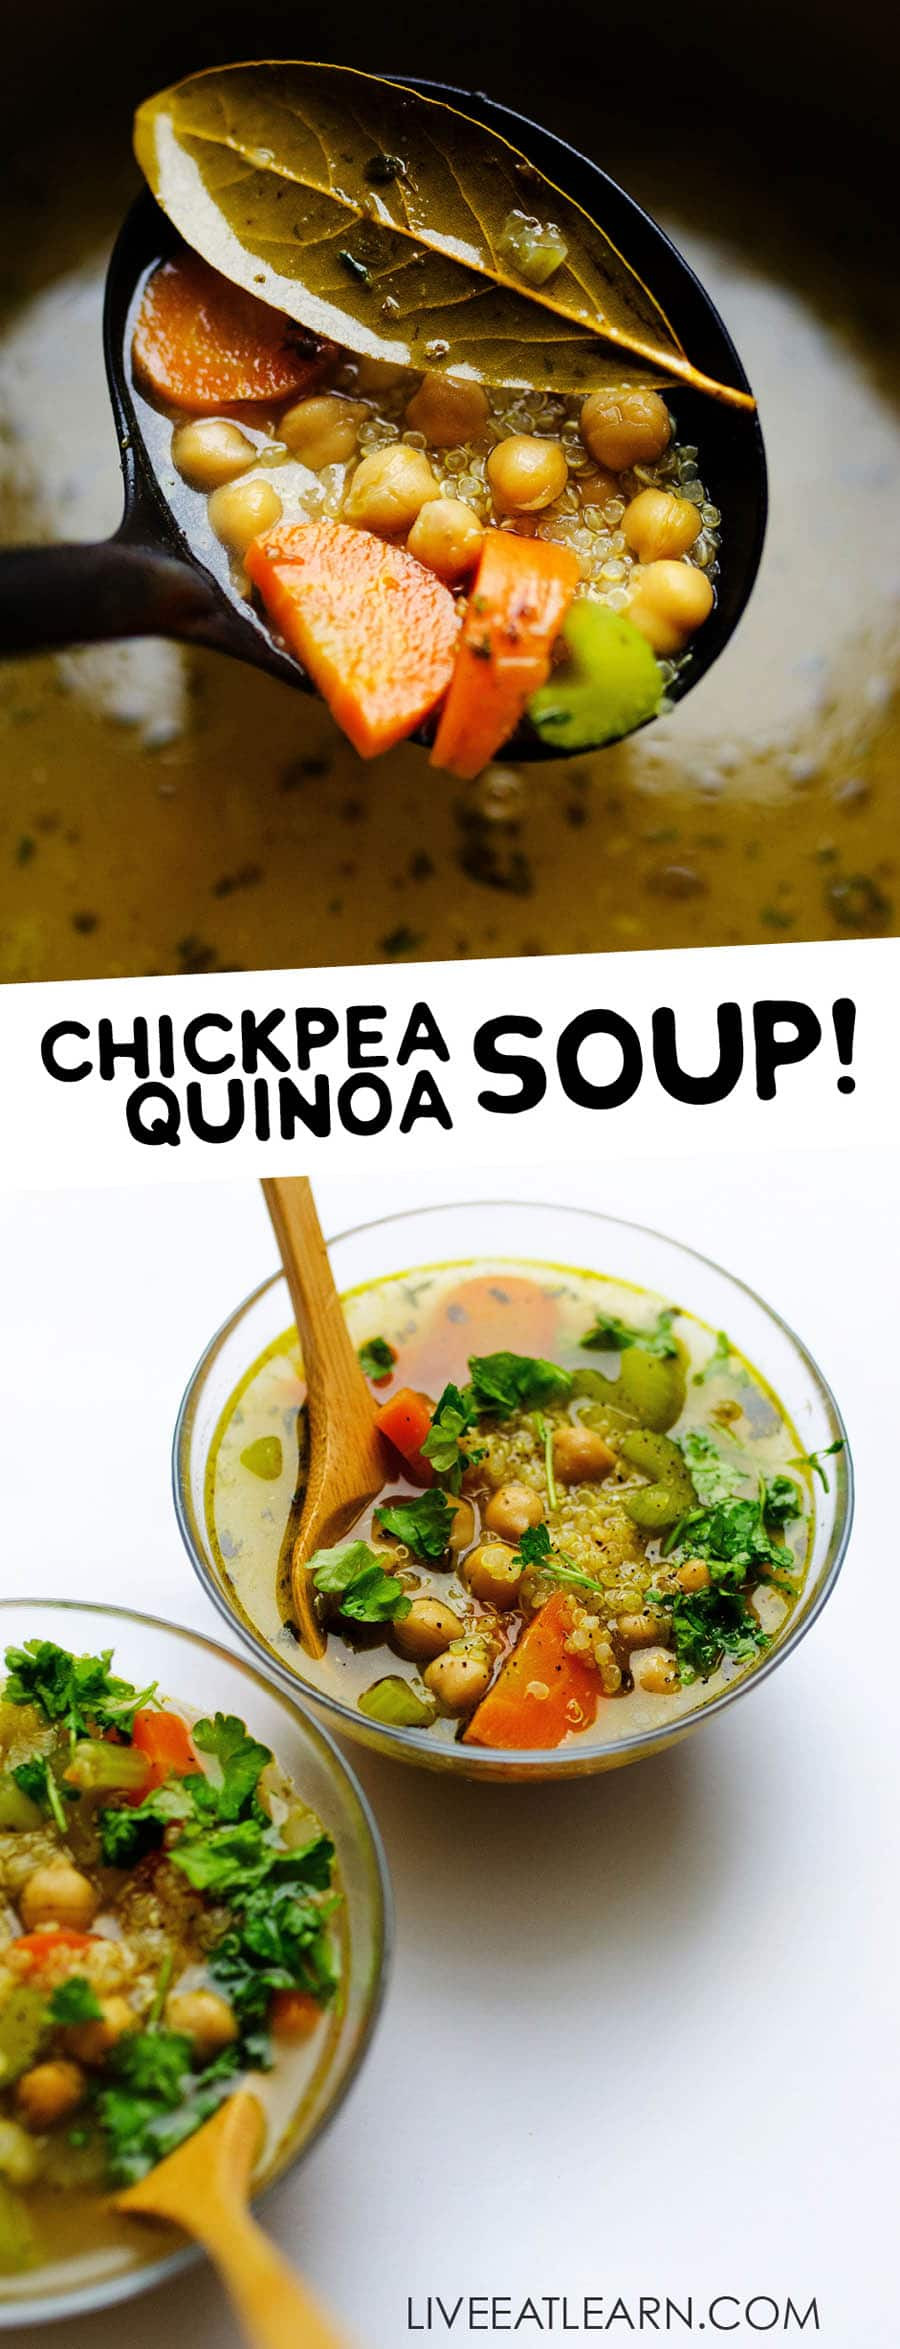 Quinoa Soup Vegetarian
 Healthy Quinoa Ve able Soup w Chickpeas under 30 minutes